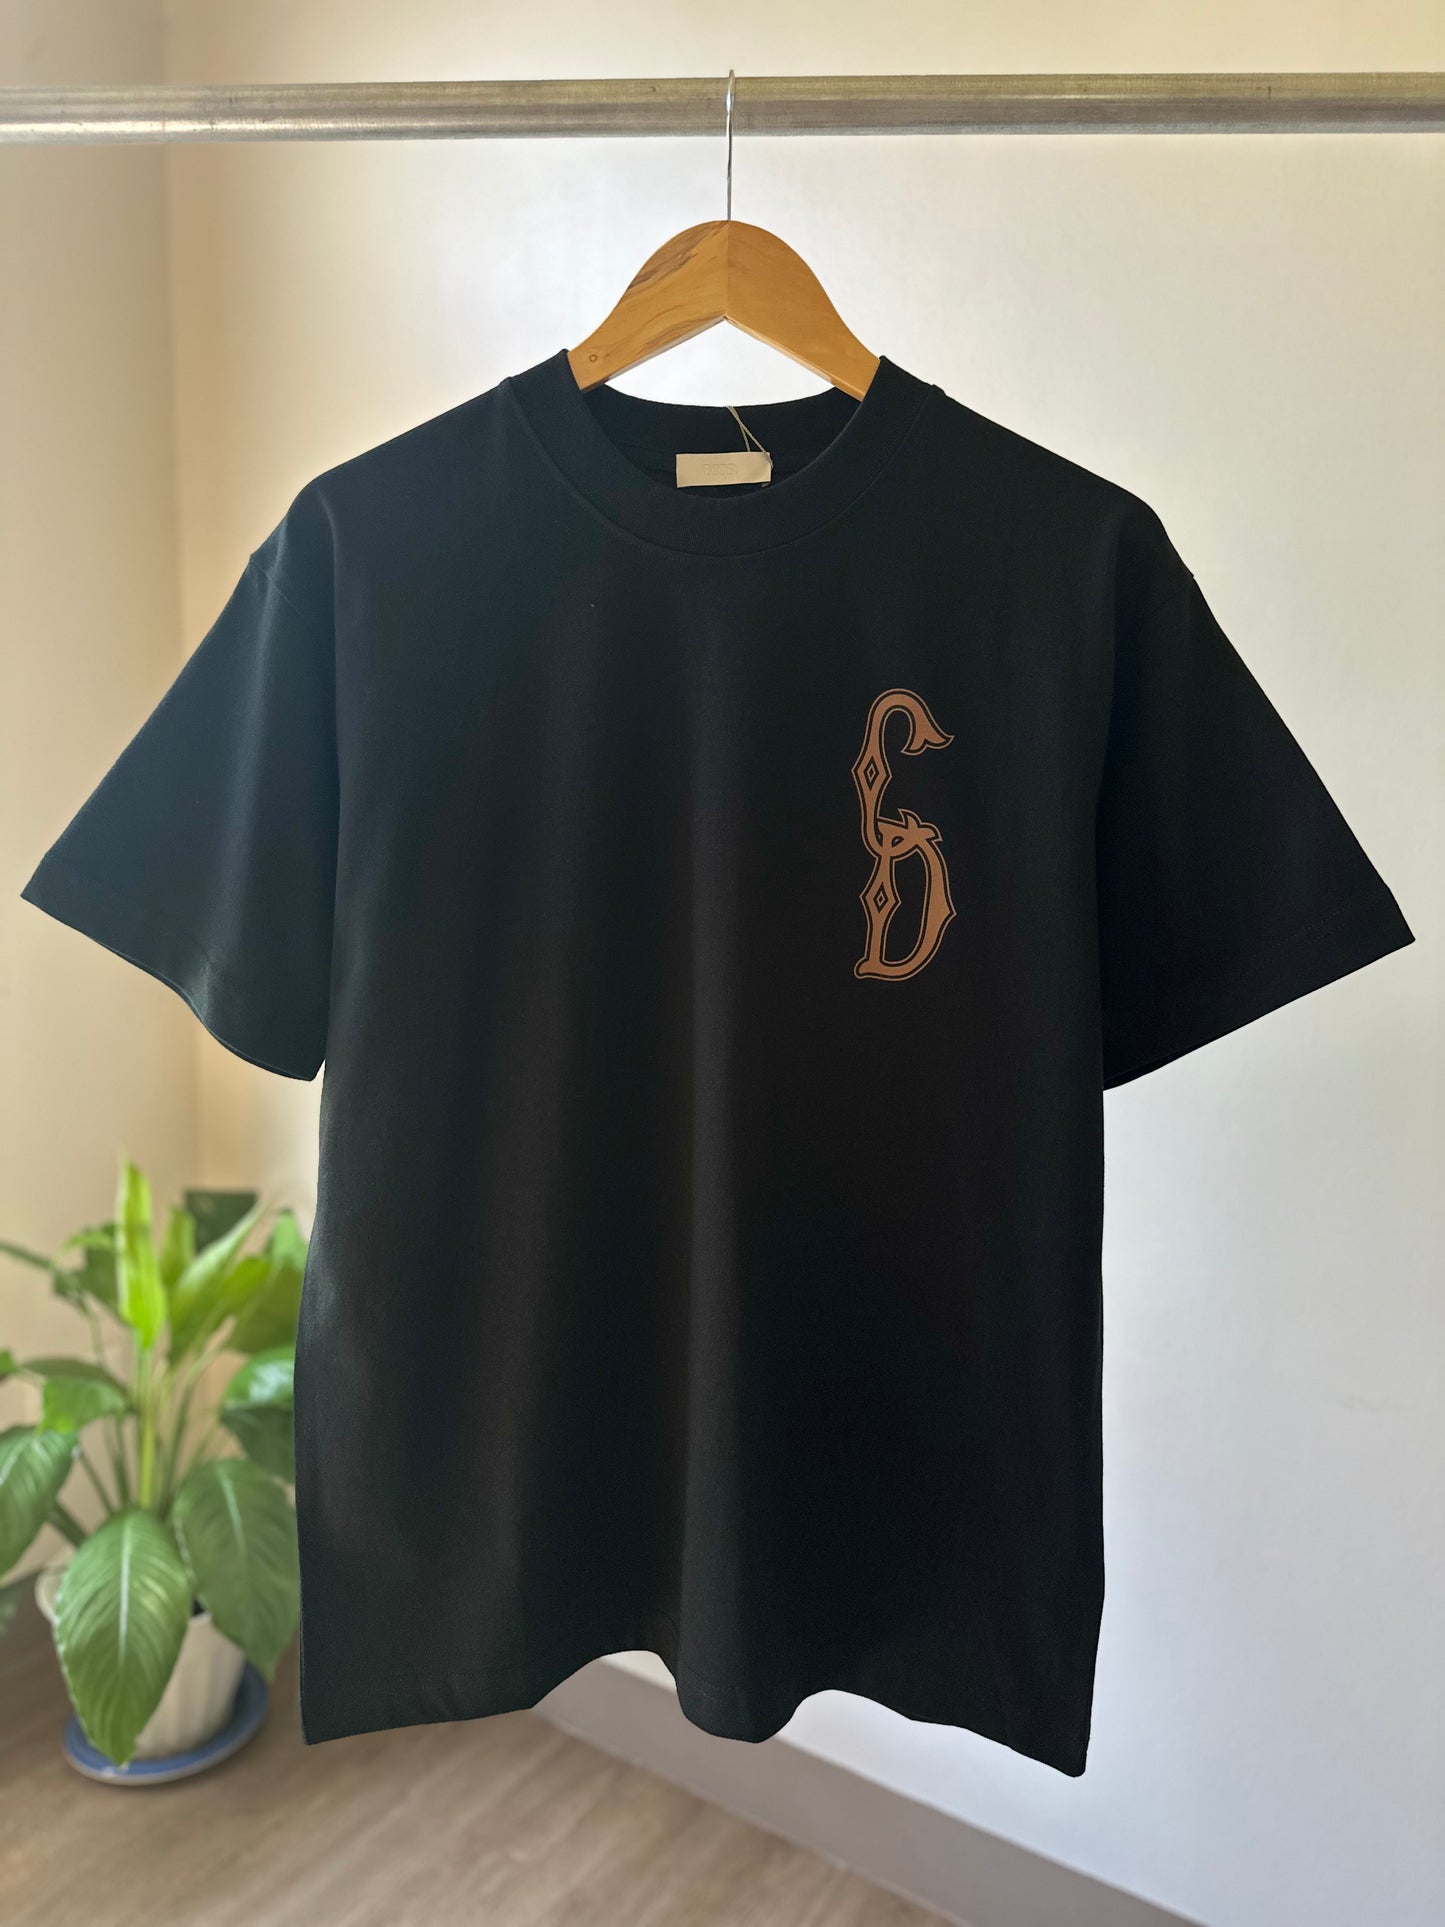 Christian Dior T-Shirt (Relaxed/Black)